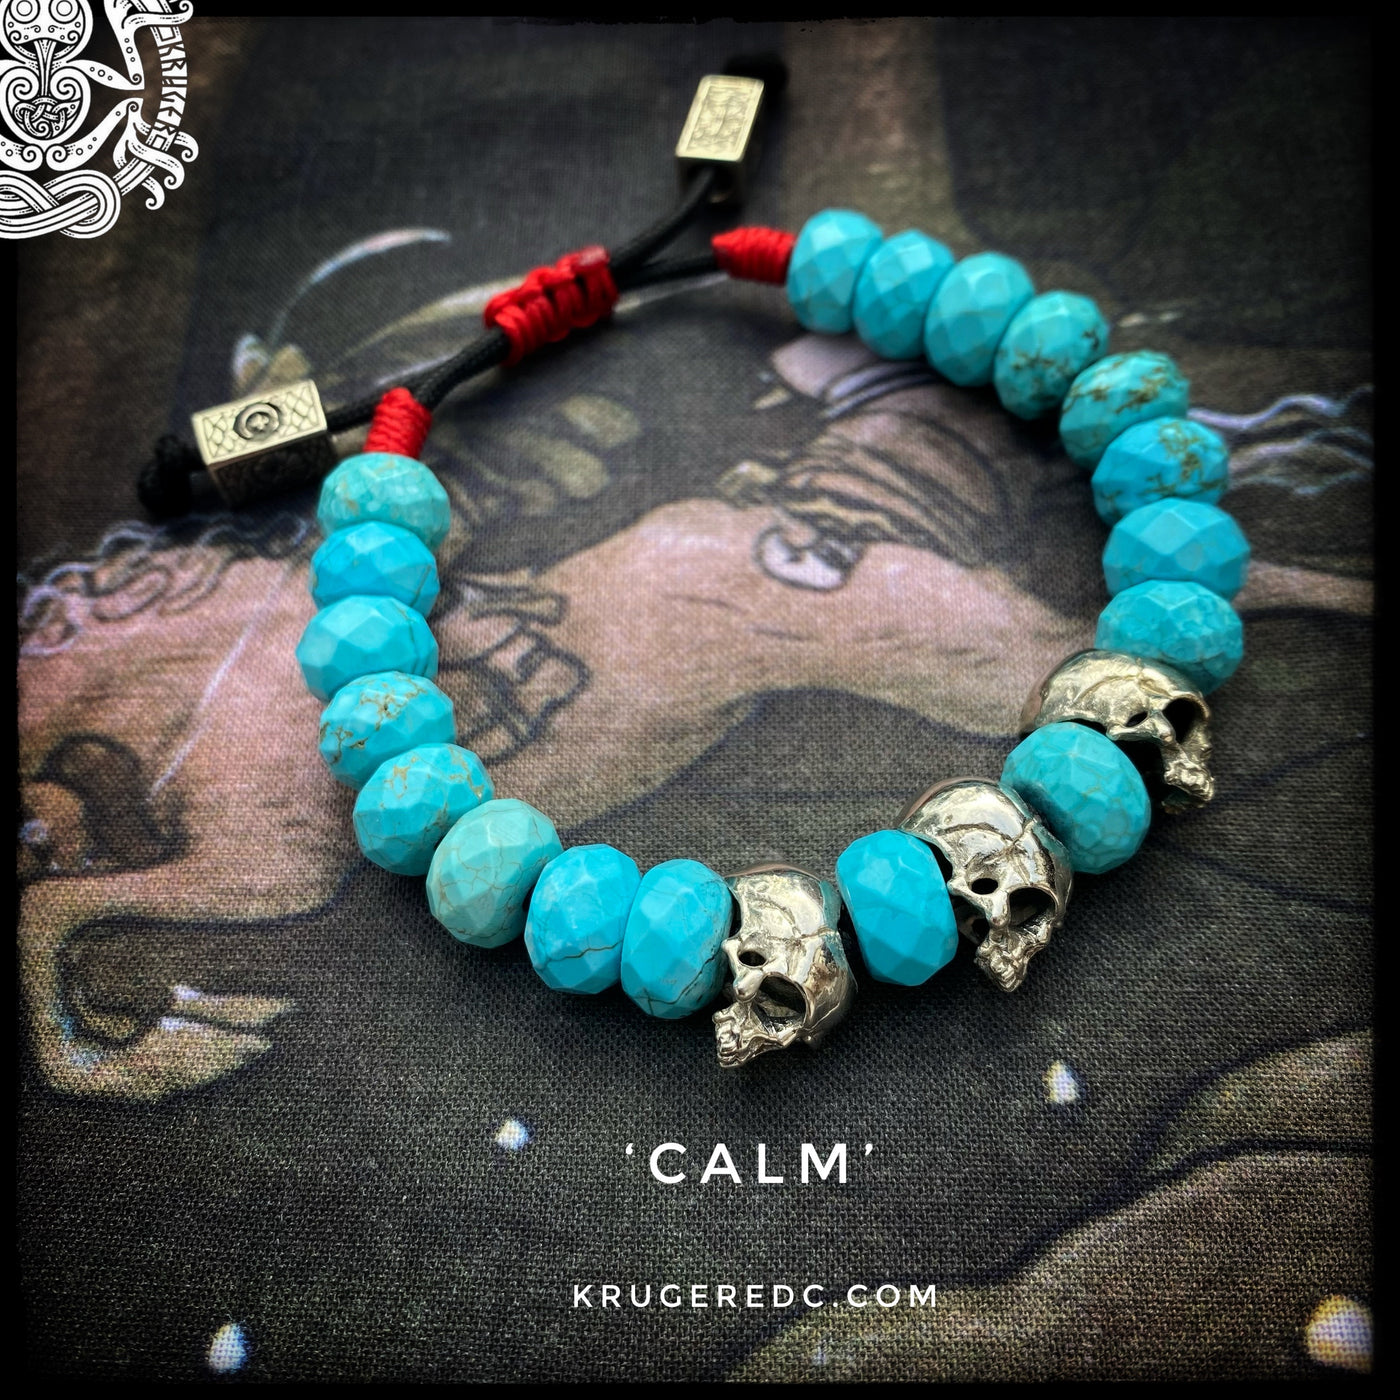 CALM - stress relieving energy bracelet